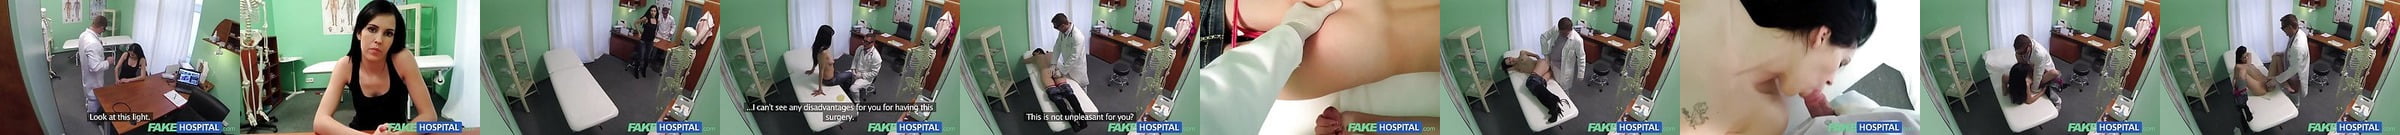 Fake Hospital Hot Blonde Gets The Full Doctors Treatment Jp